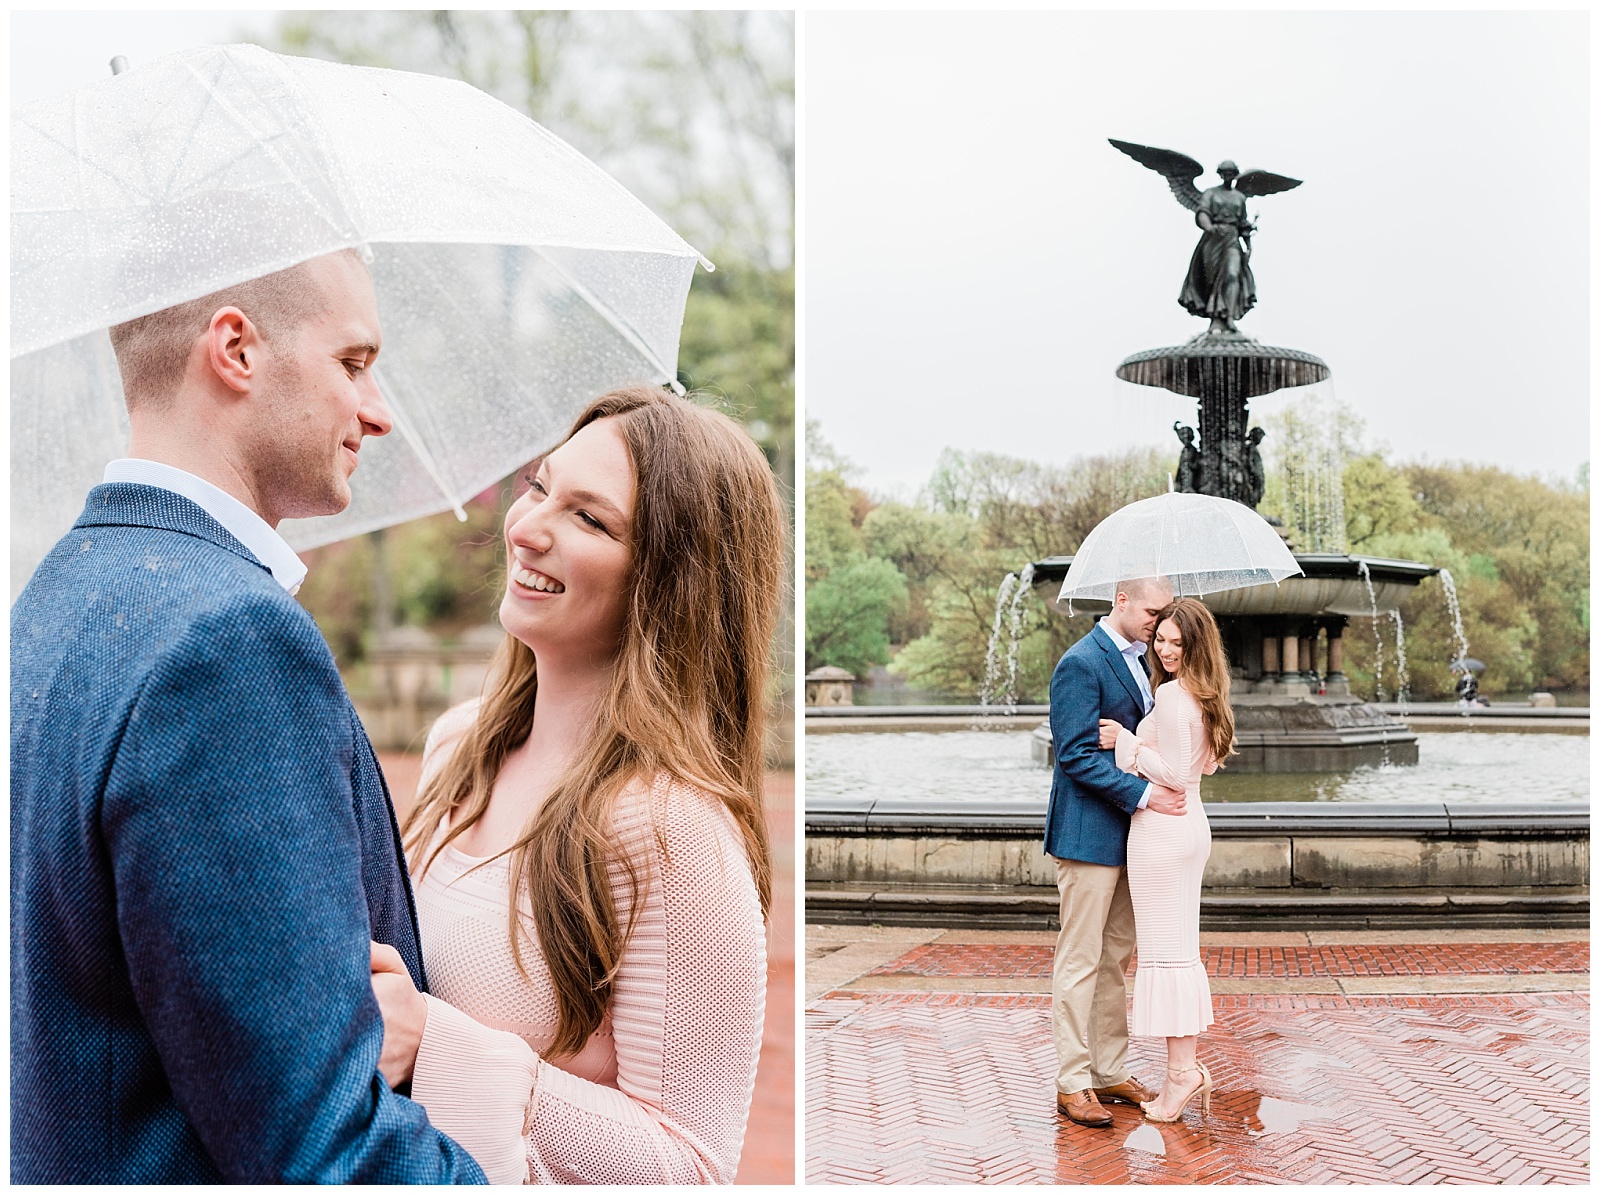 A couple shares an umbrella in front of Bethesda Fountain.